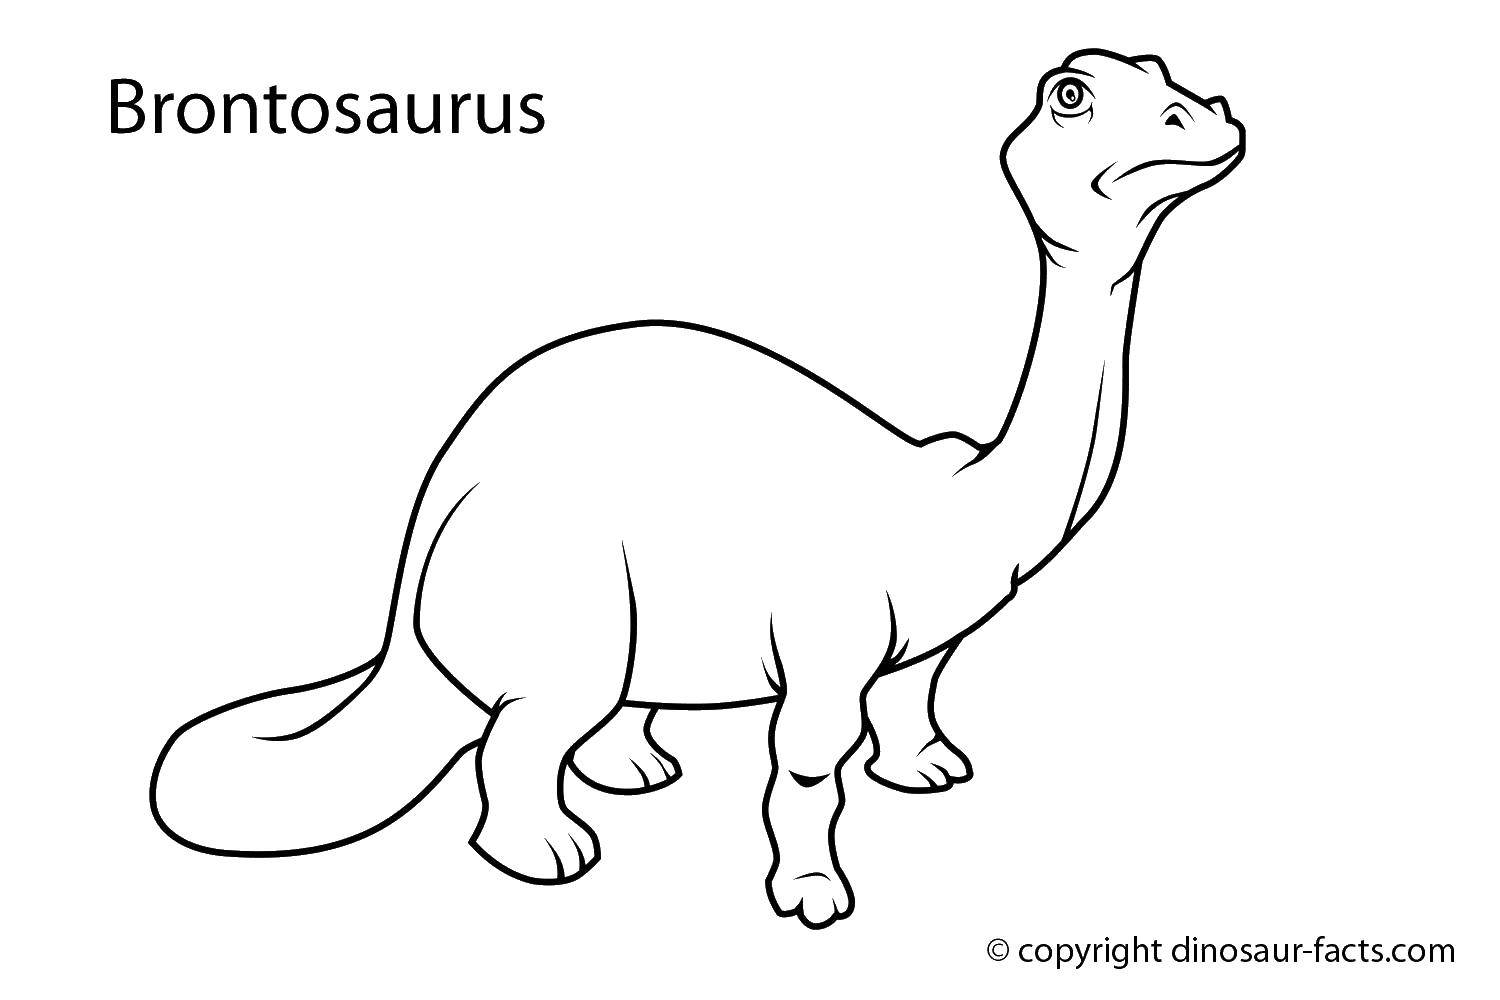 Coloring Maleky brontosaur. Category Jurassic Park. Tags:  Brontosaurus, dinosaur, tail.